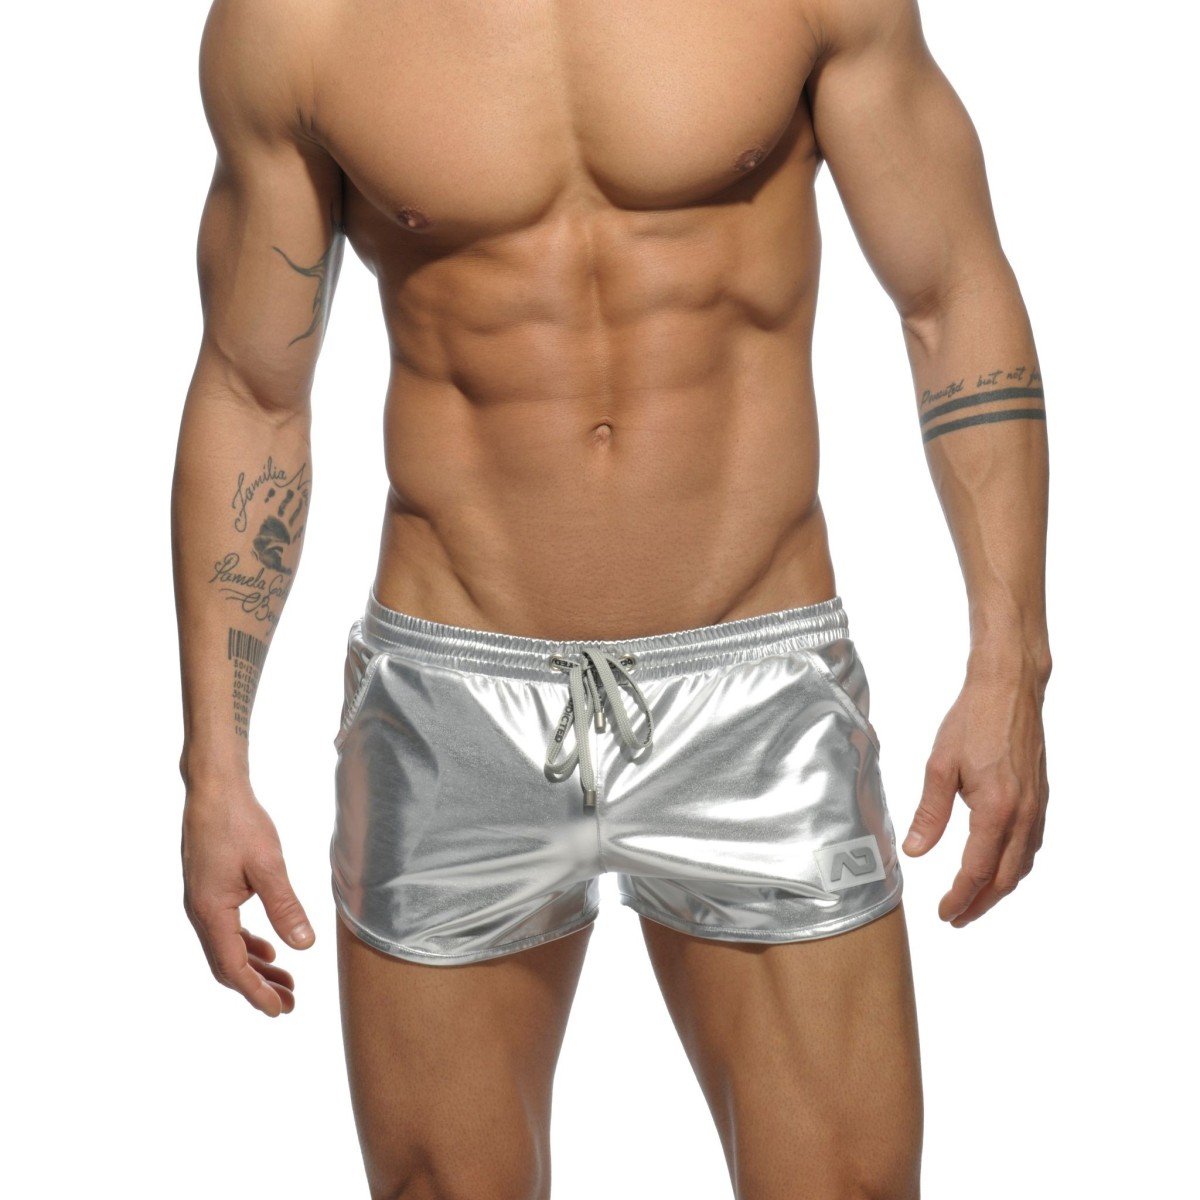 Šortky Addicted AD562 Metallic Short stříbrné XL, pánské šortky